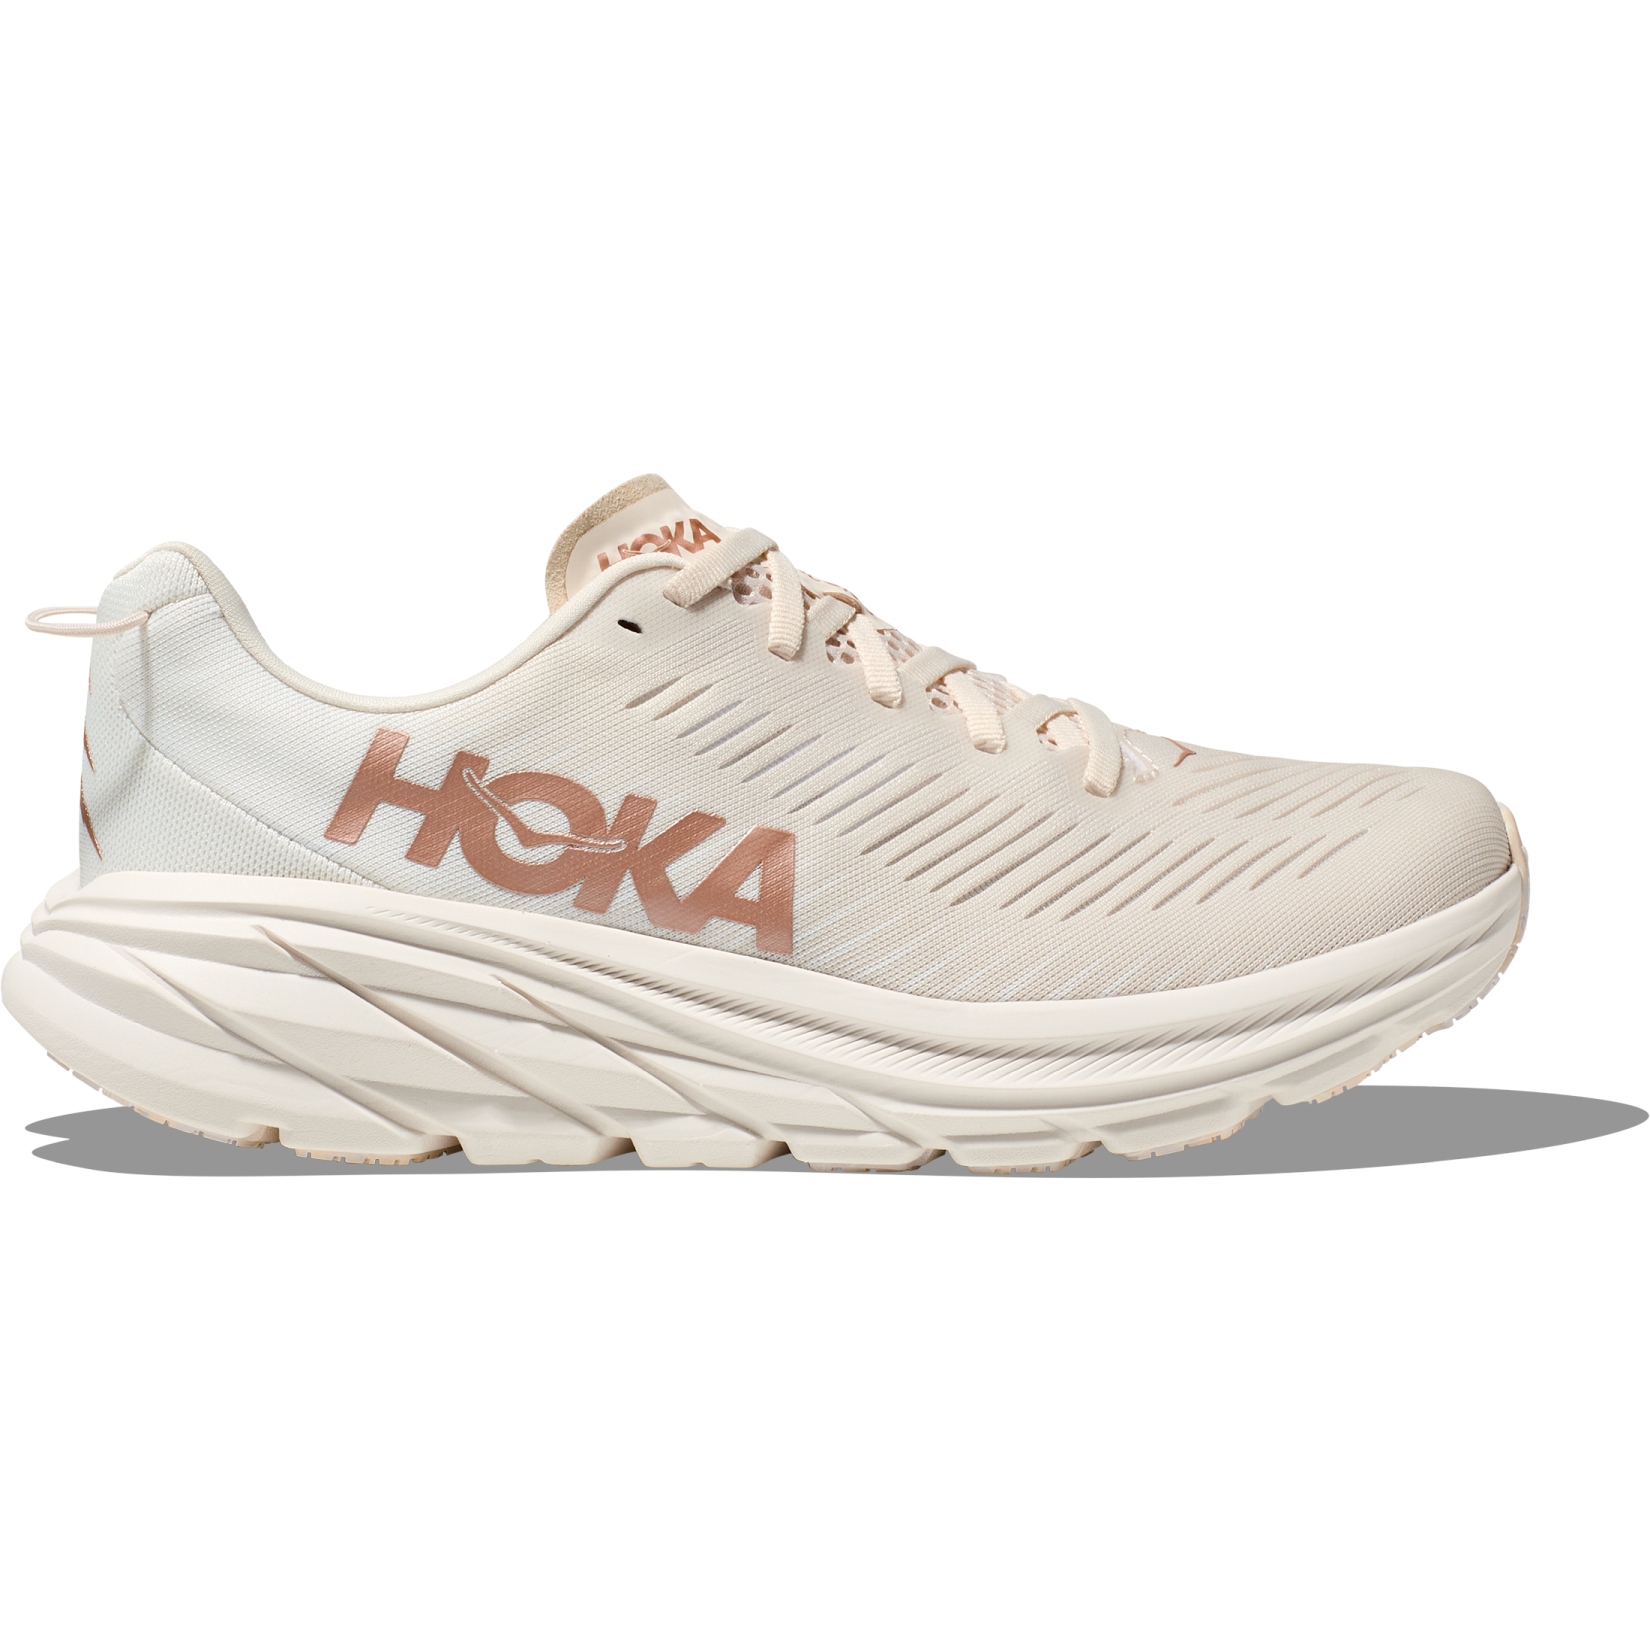 Hoka Rincon 3 Running Shoes Women - eggnog / rose gold